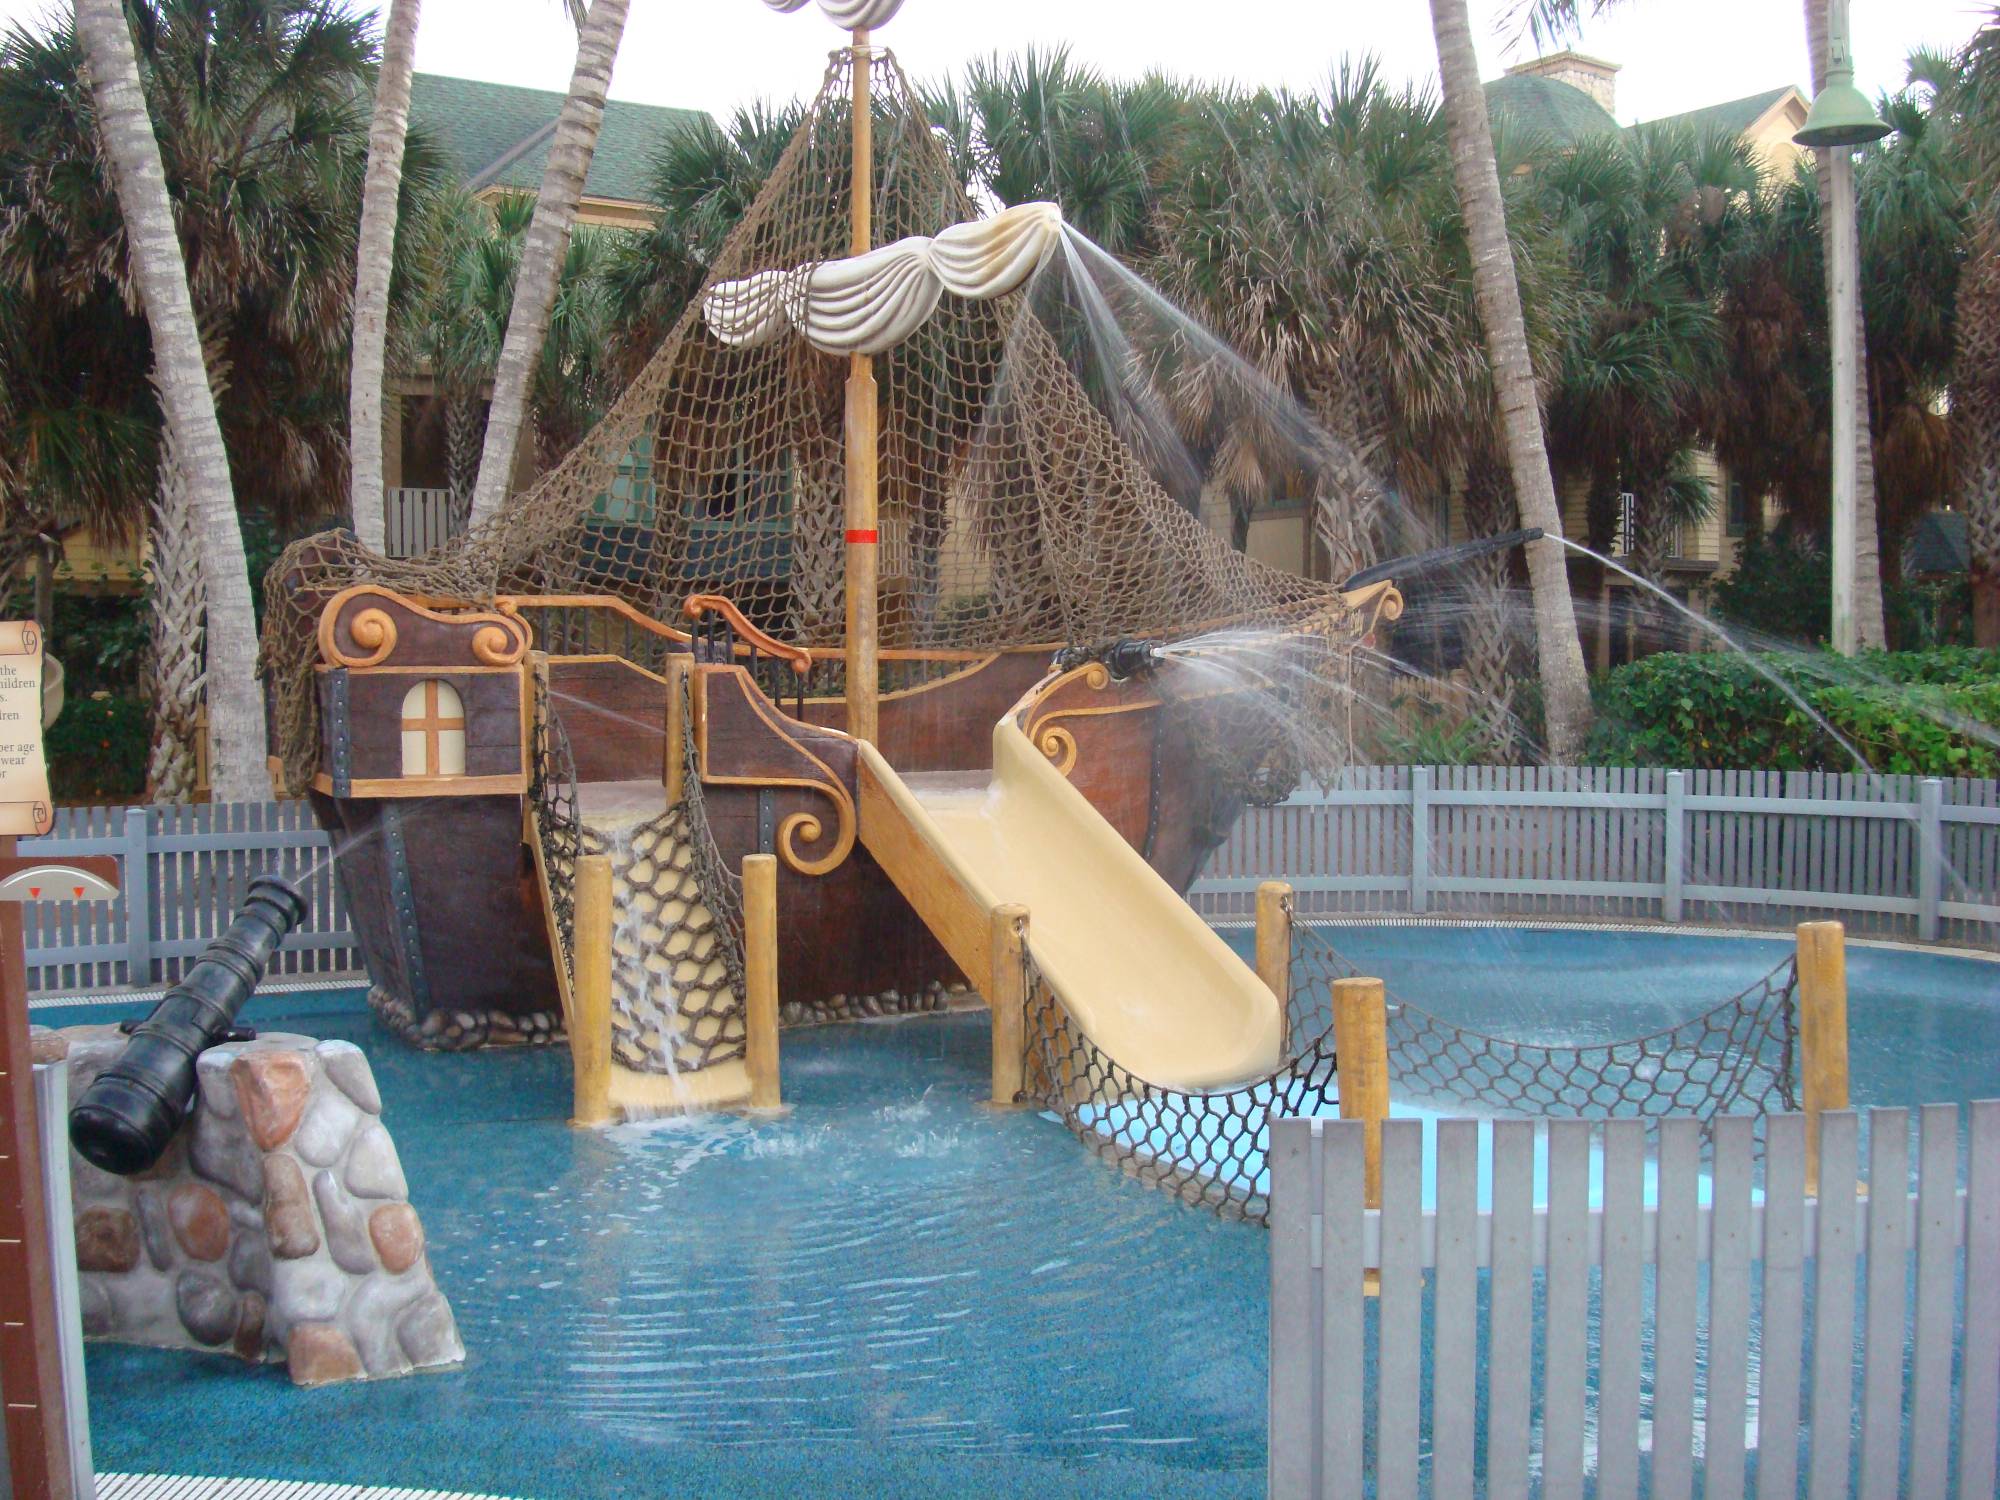 Vero Beach - interactive water play area